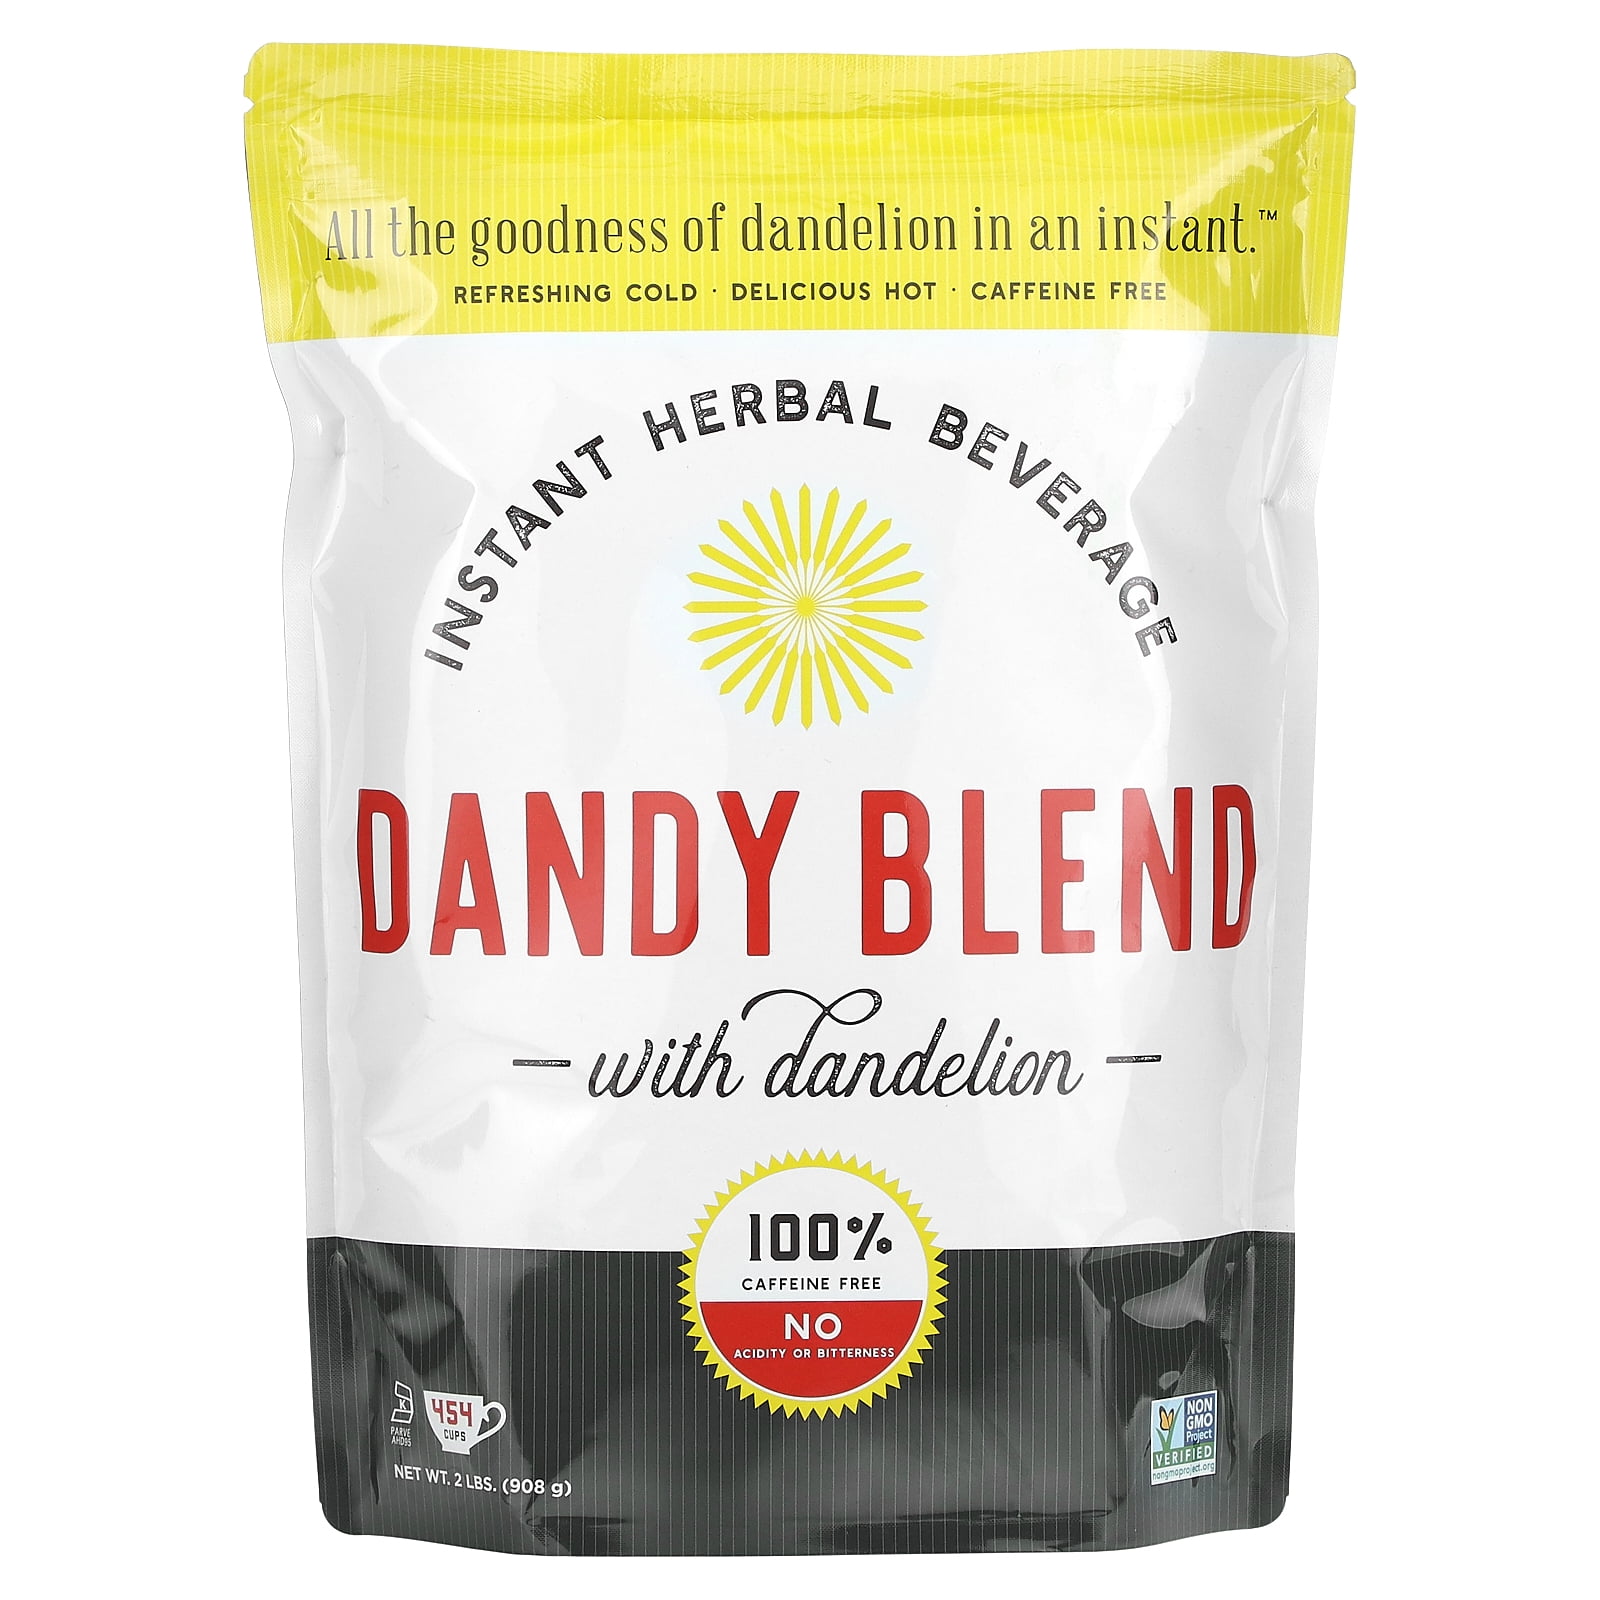  454 Cup Bag of Original Dandy Blend Instant Herbal